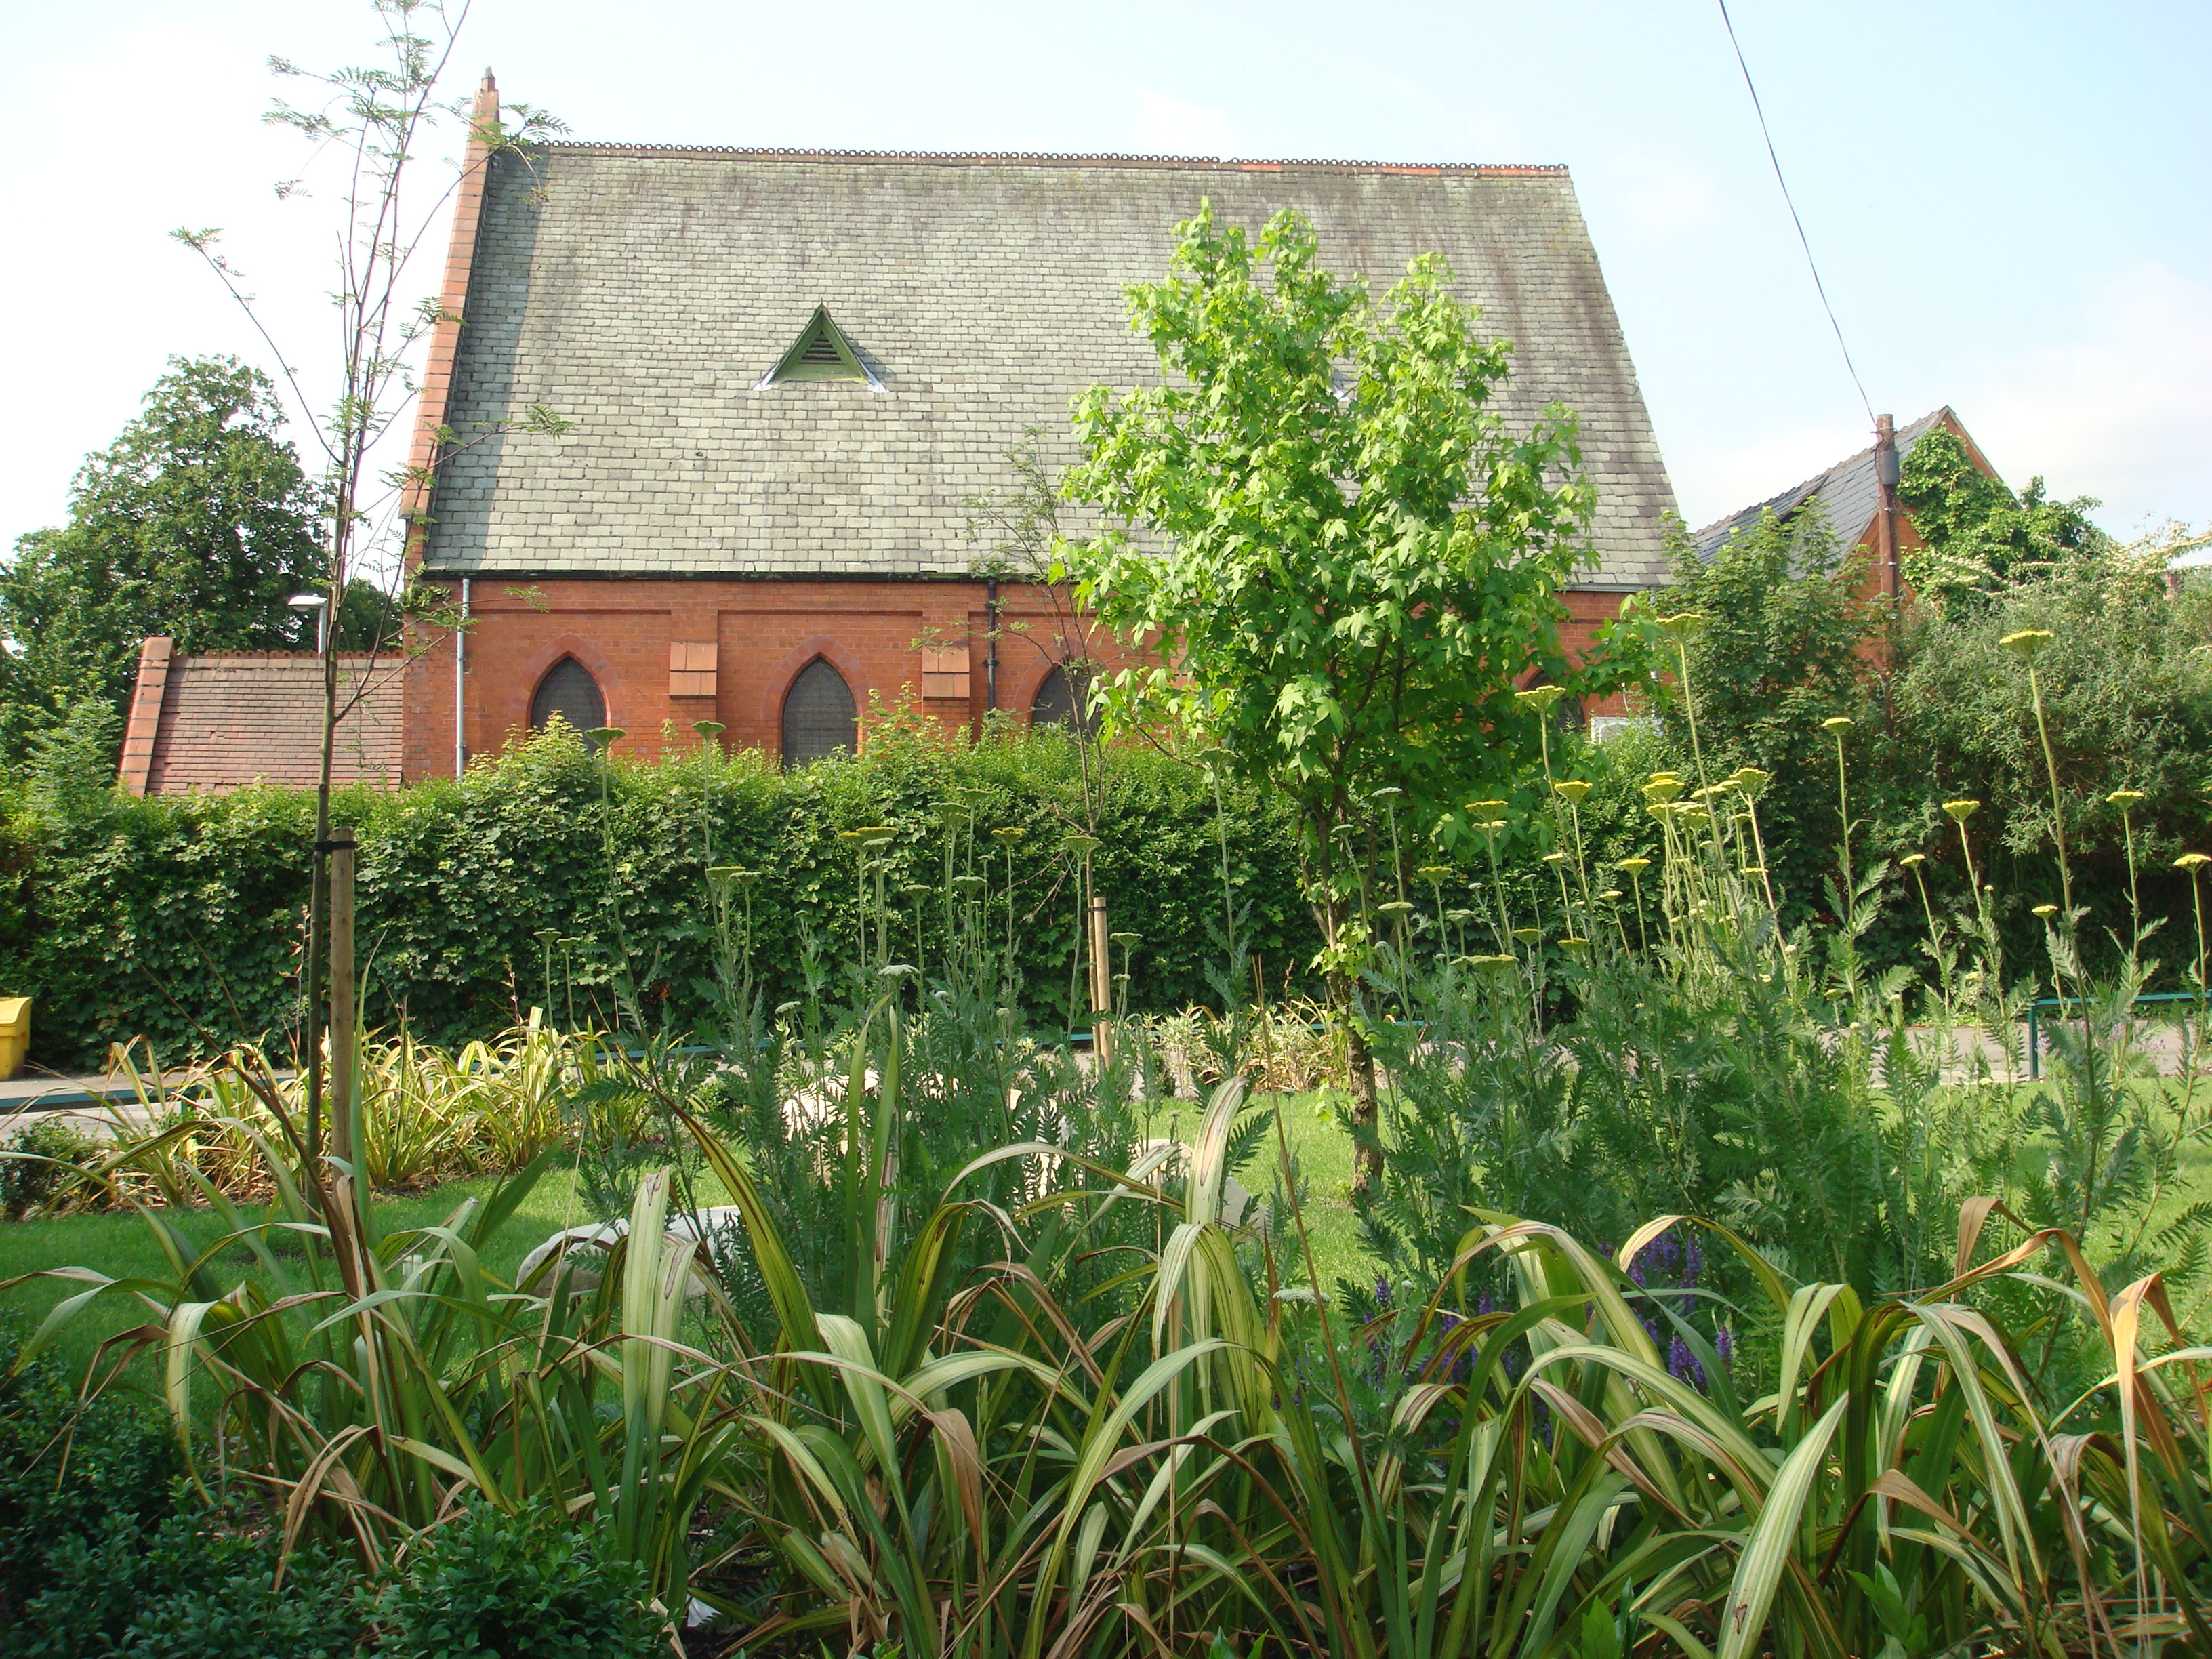 Primitive Methodist Chapel, Burton Road, Withington